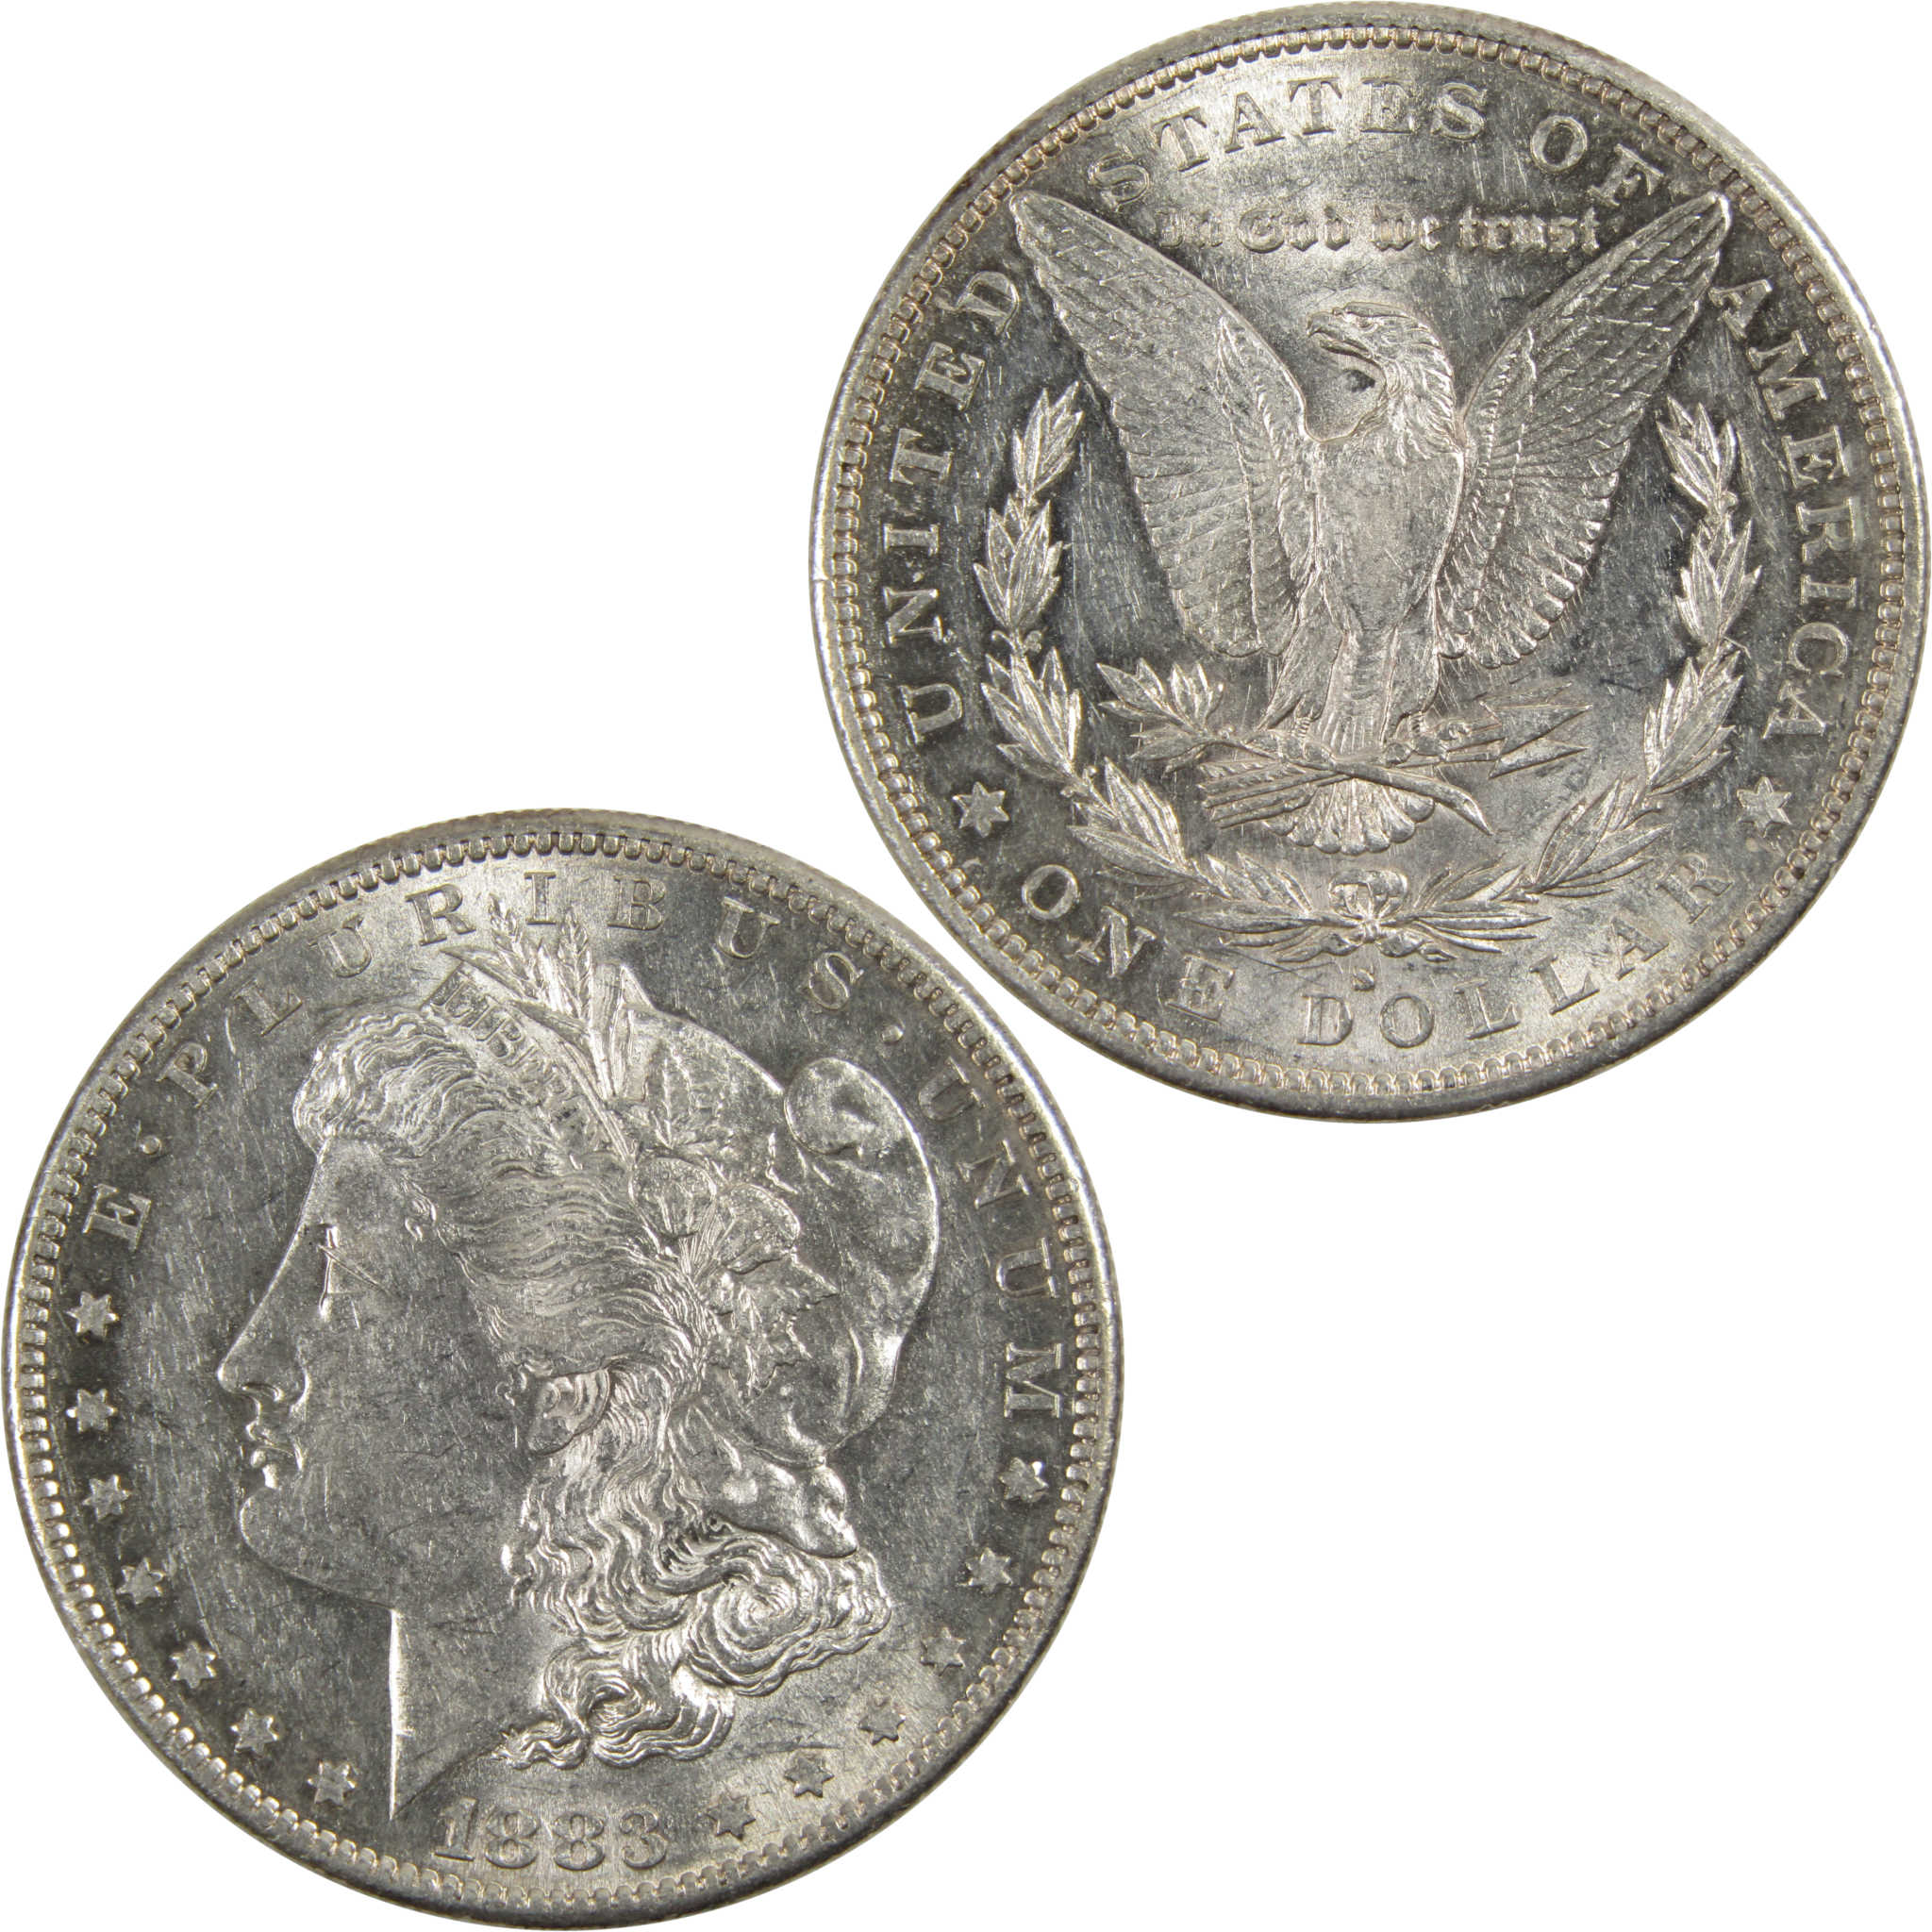 1883 S Morgan Dollar Borderline Uncirculated 90% Silver $1 SKU:I8087 - Morgan coin - Morgan silver dollar - Morgan silver dollar for sale - Profile Coins &amp; Collectibles